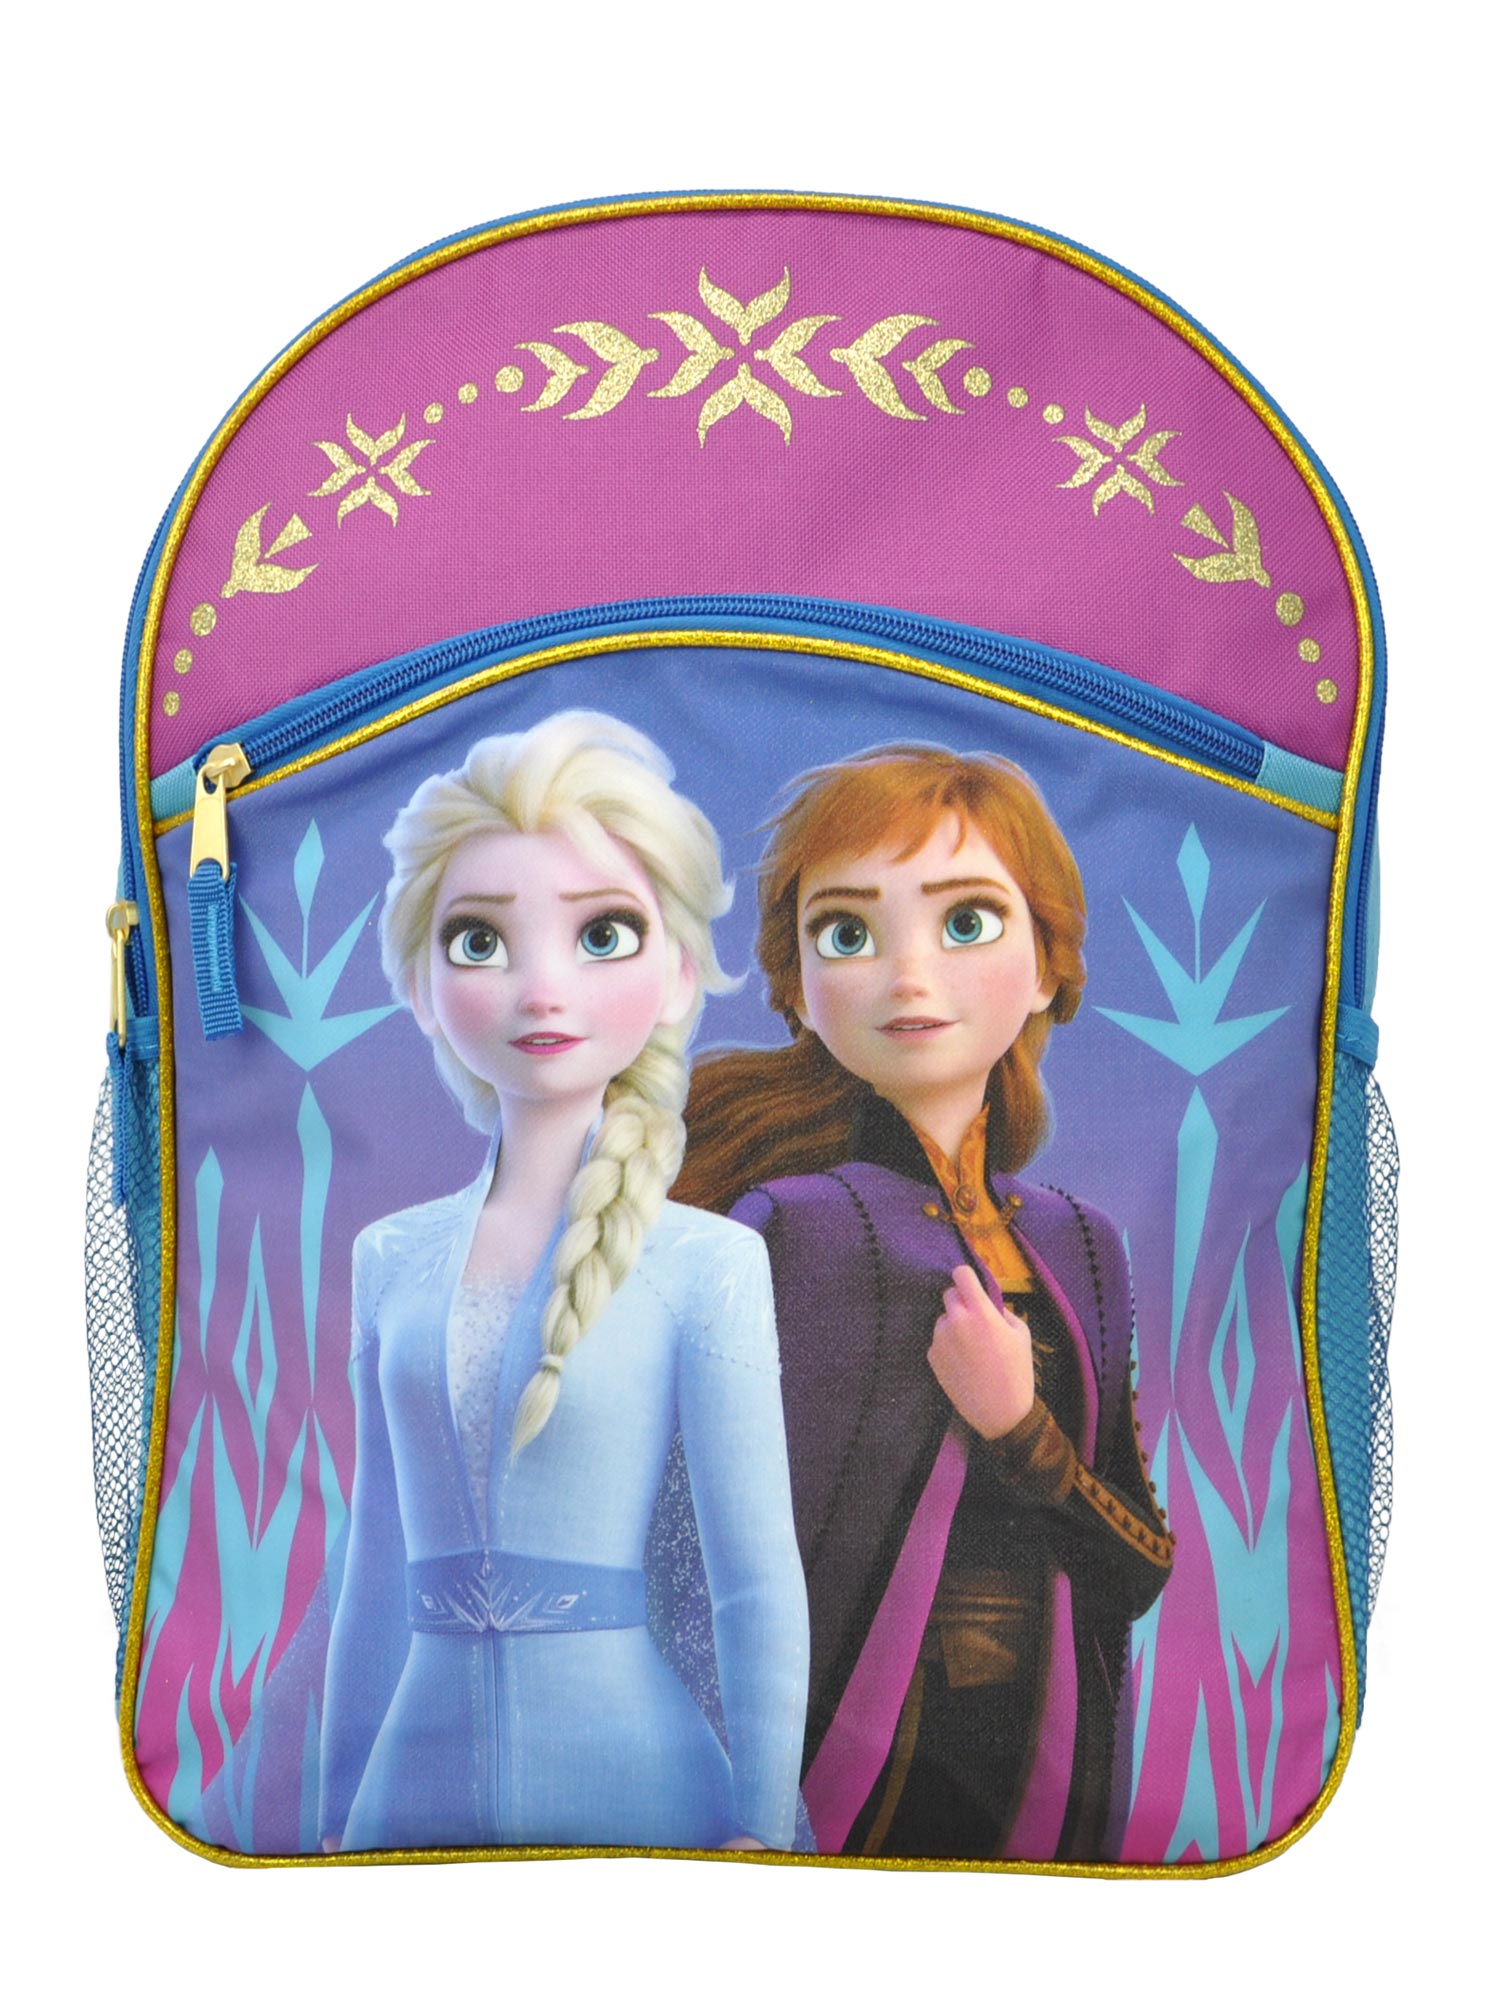 Disney Frozen II Elsa & Anna Large 16 Backpack Blue Purple - image 1 of 3